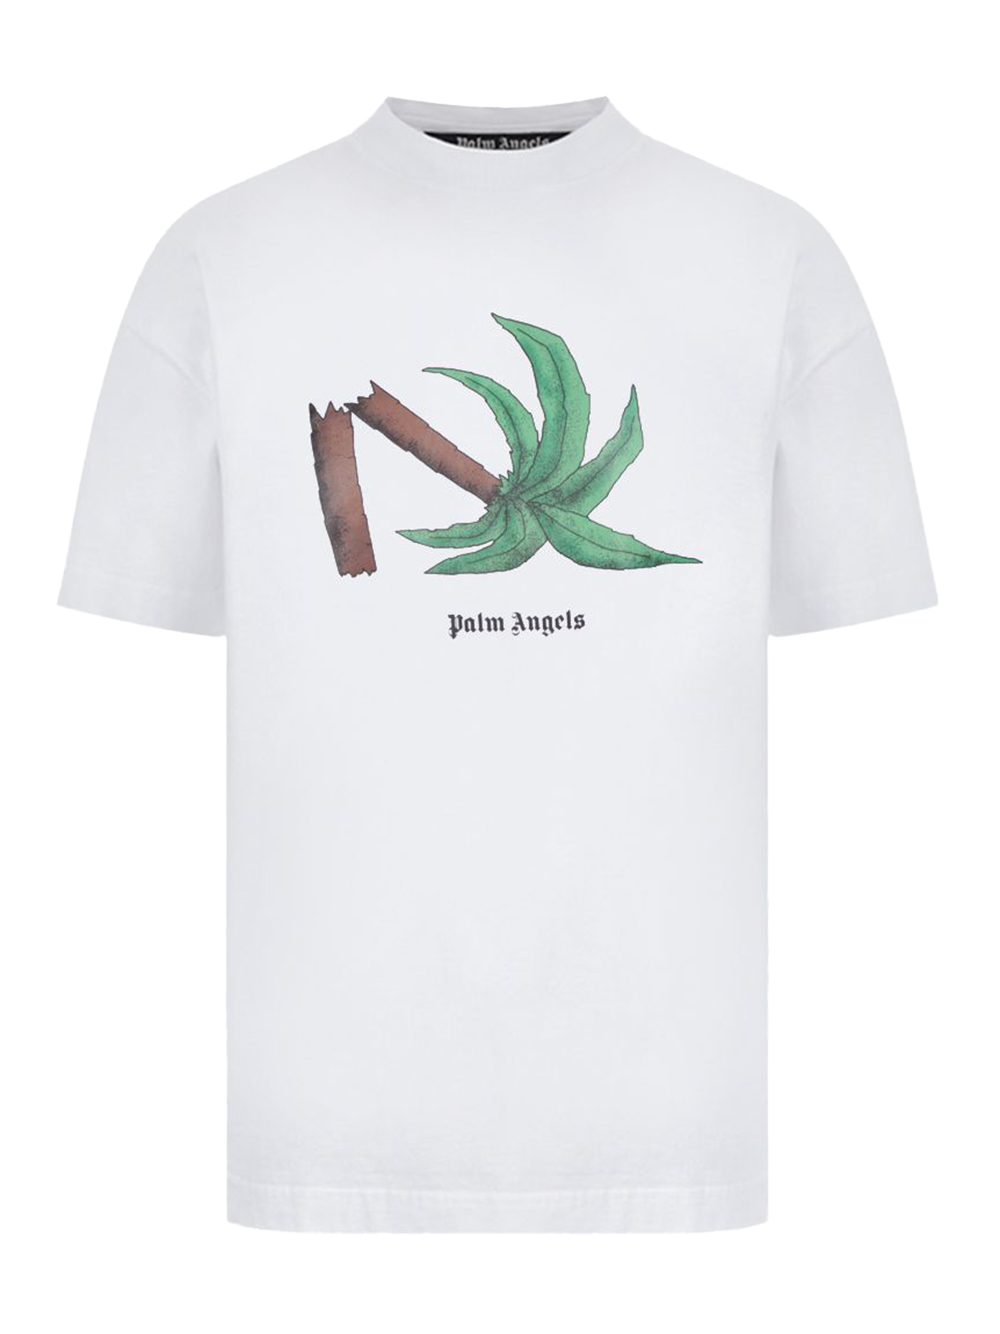 Palm Angels Broken Palm T Shirt White/Brown/Green Men's   SS   US